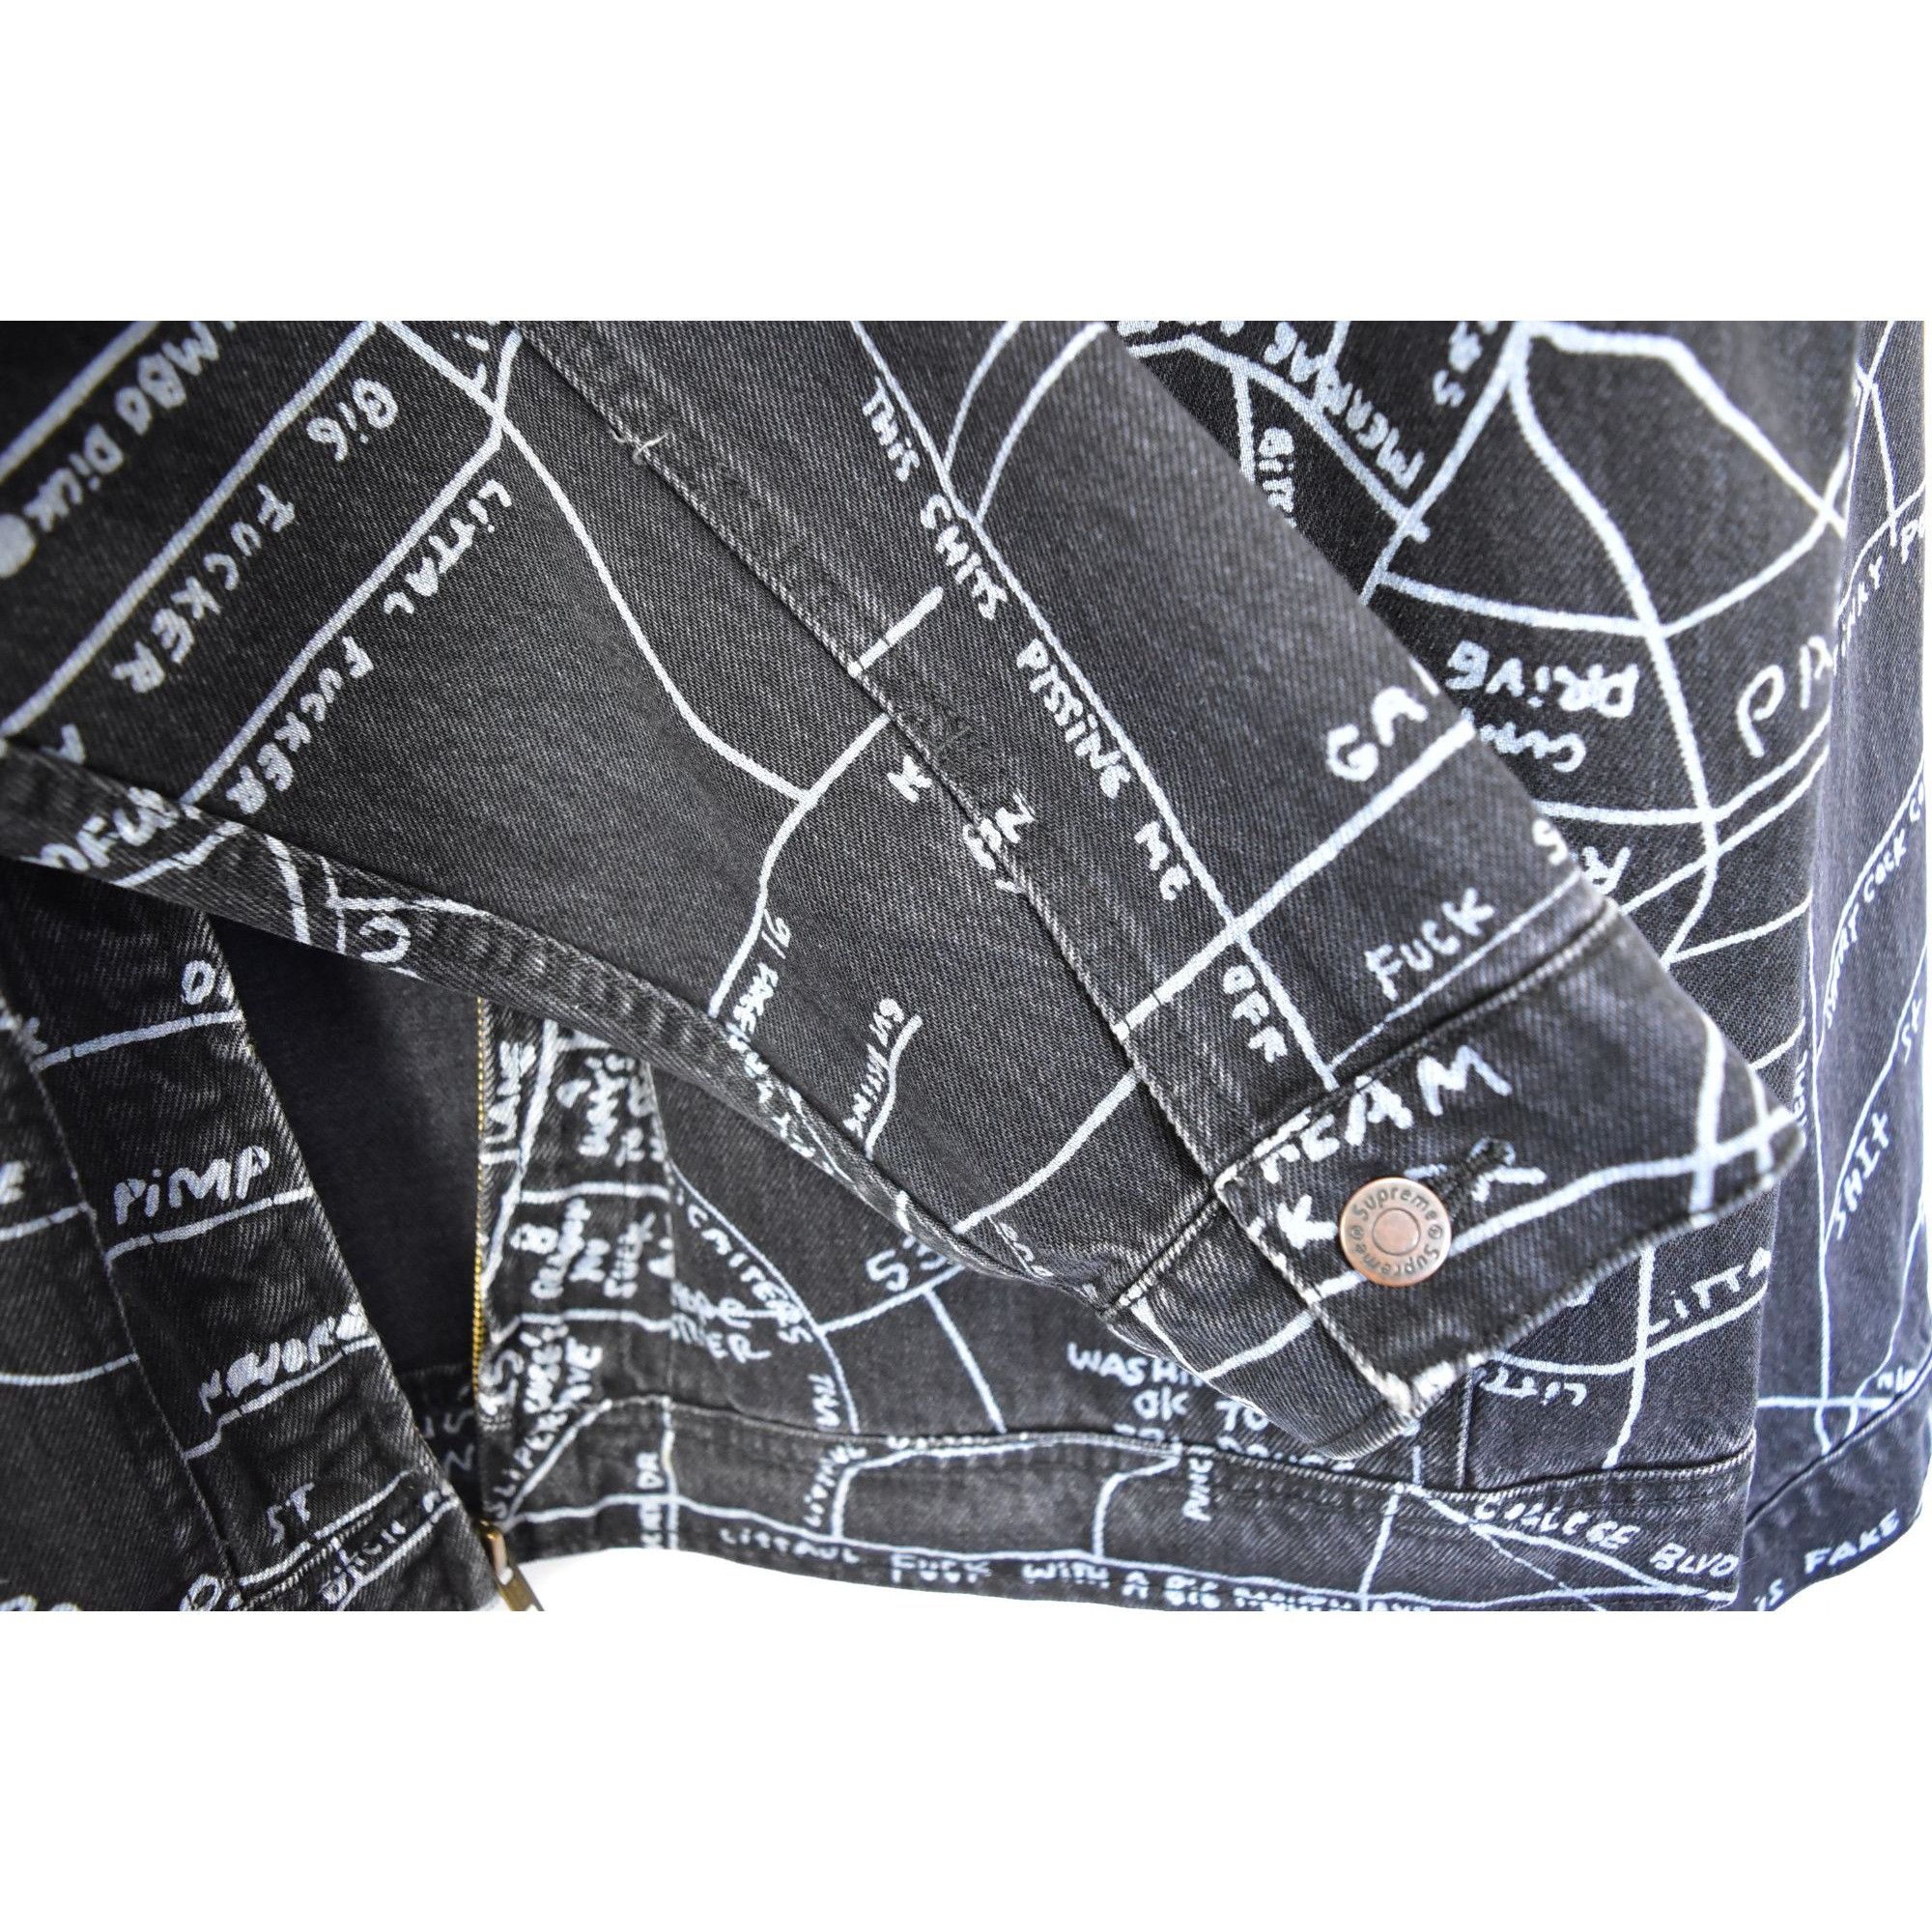 Supreme gonz map work jacket graffiti jacket 29185 - 863 326 | Grailed